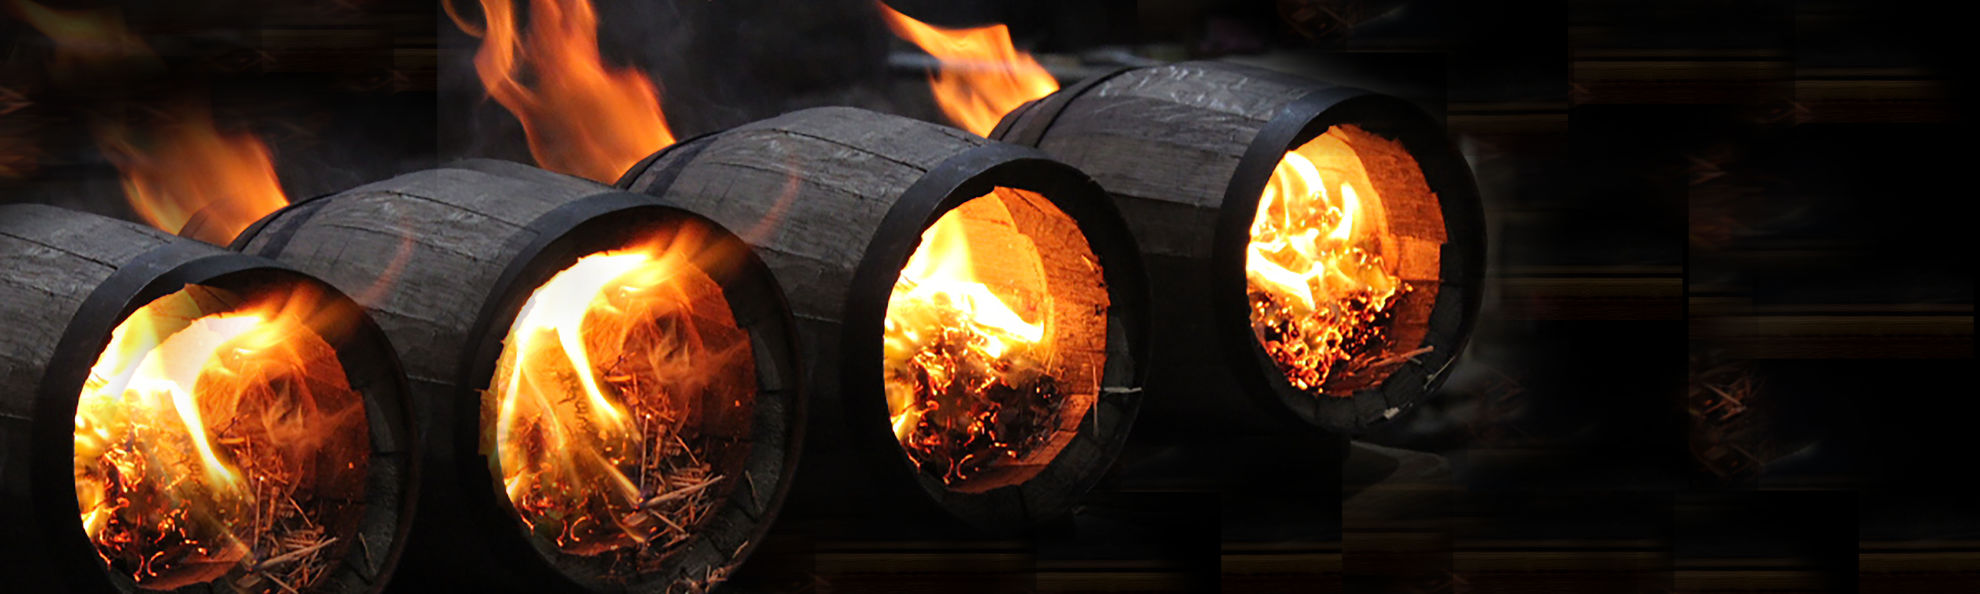 oak barrels being charred